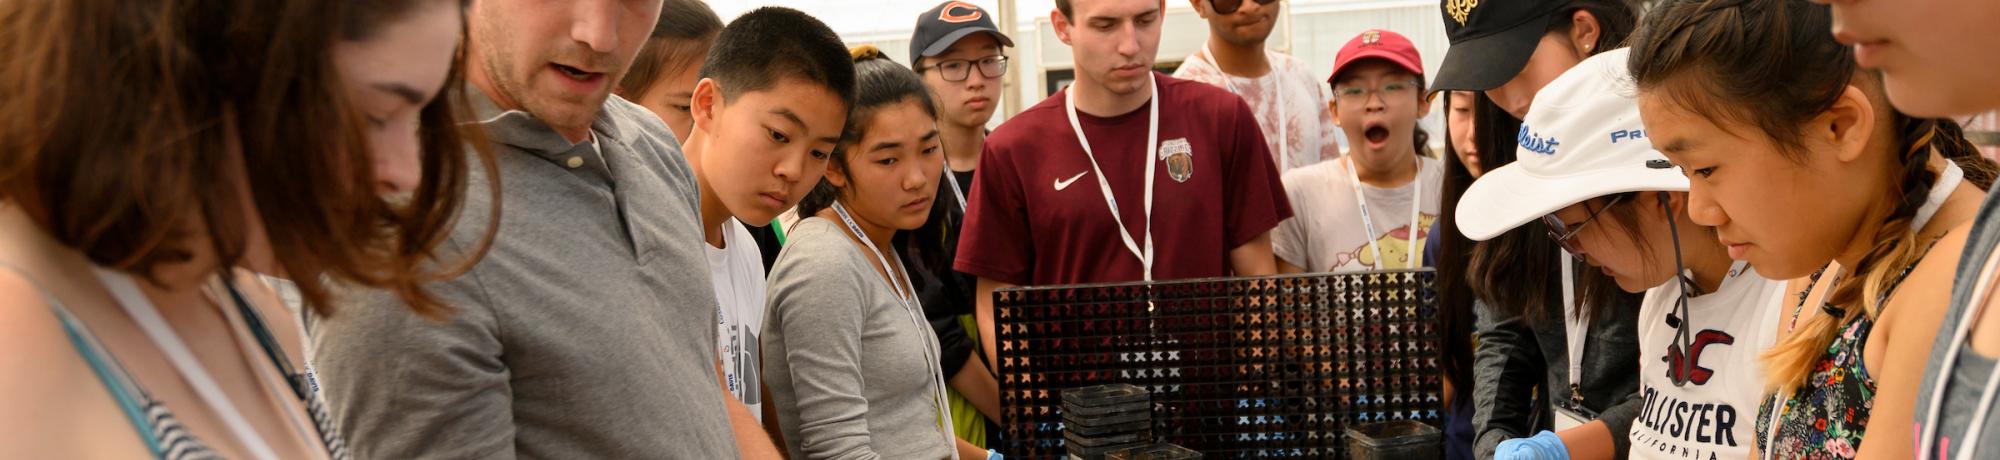 UC Davis students and youth looking at samples